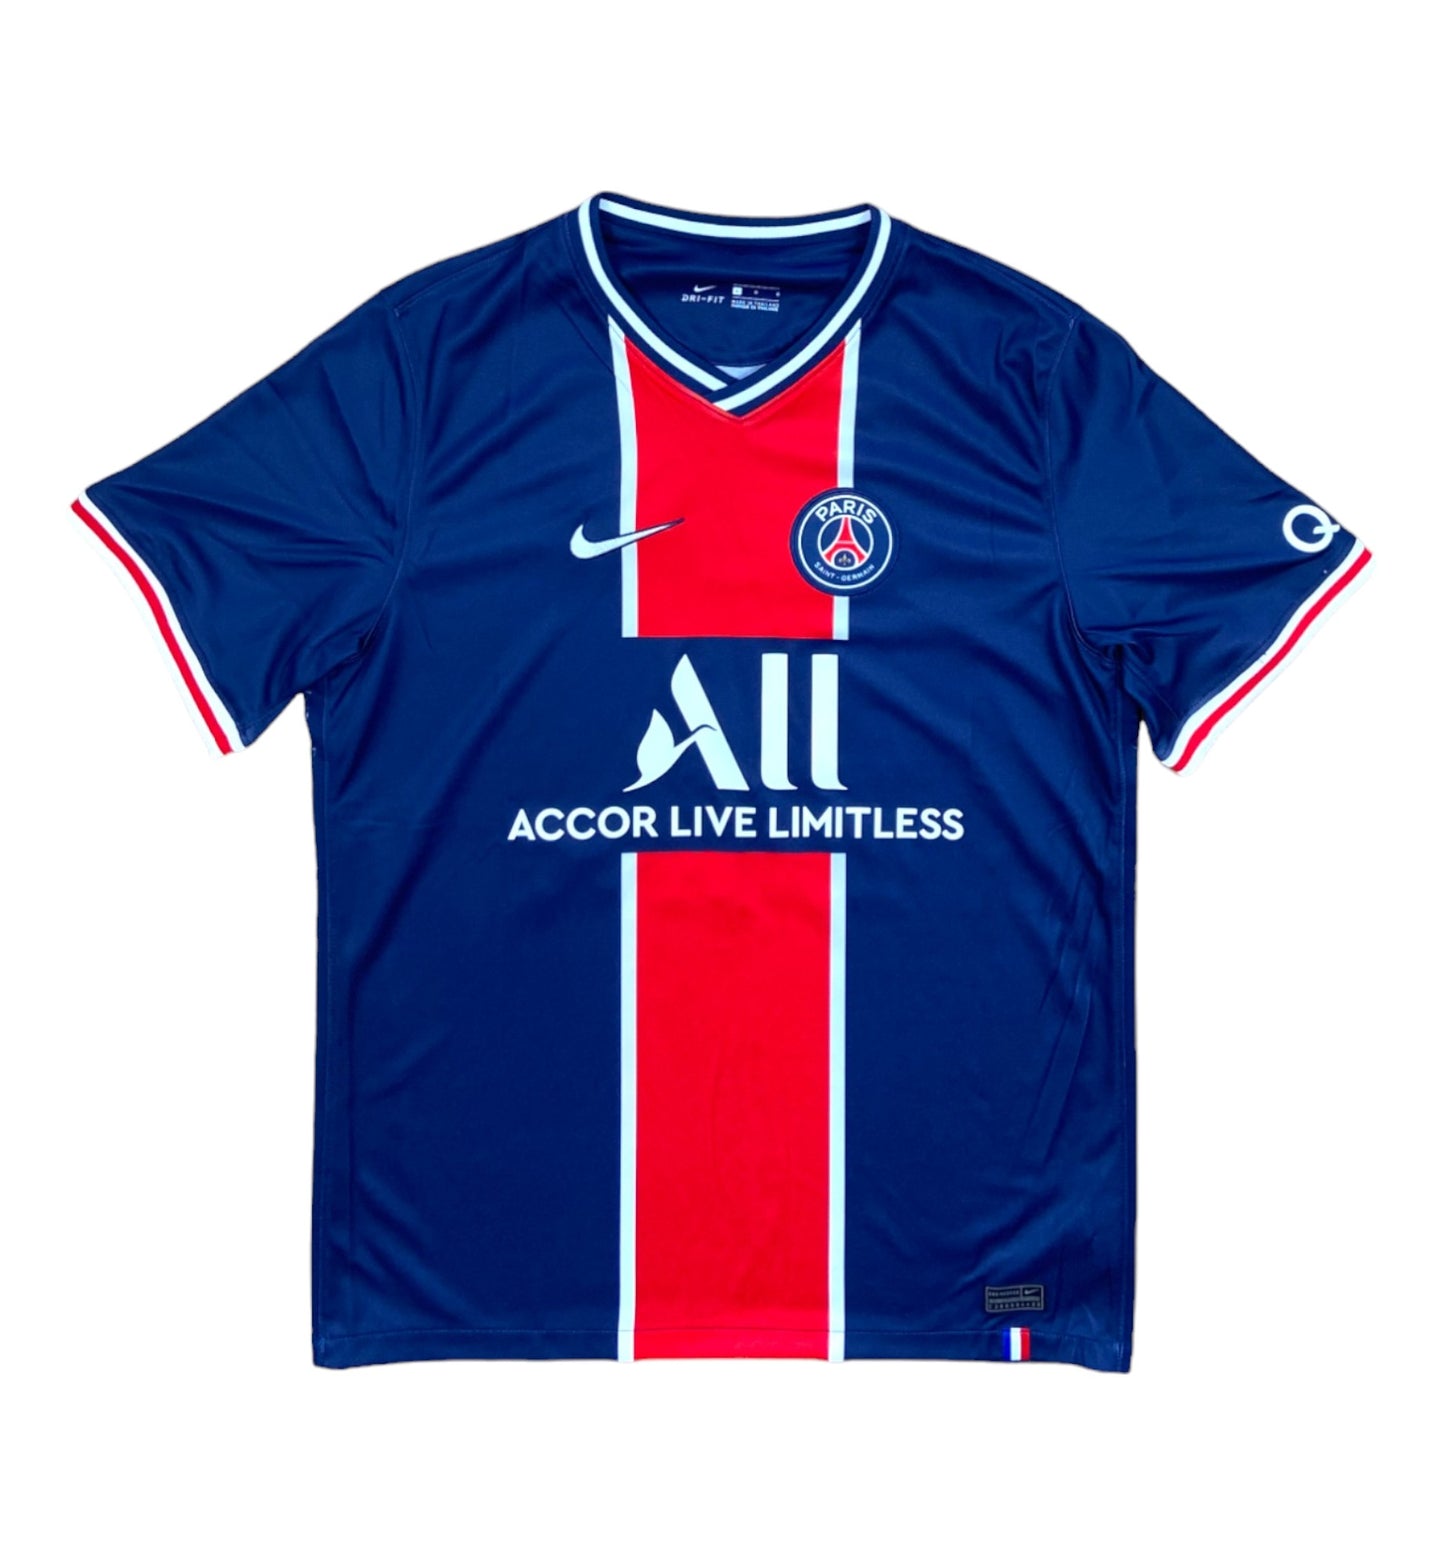 2020 2021 Paris Saint-Germain Nike Home Football Shirt MBAPPE 7 Men's Large